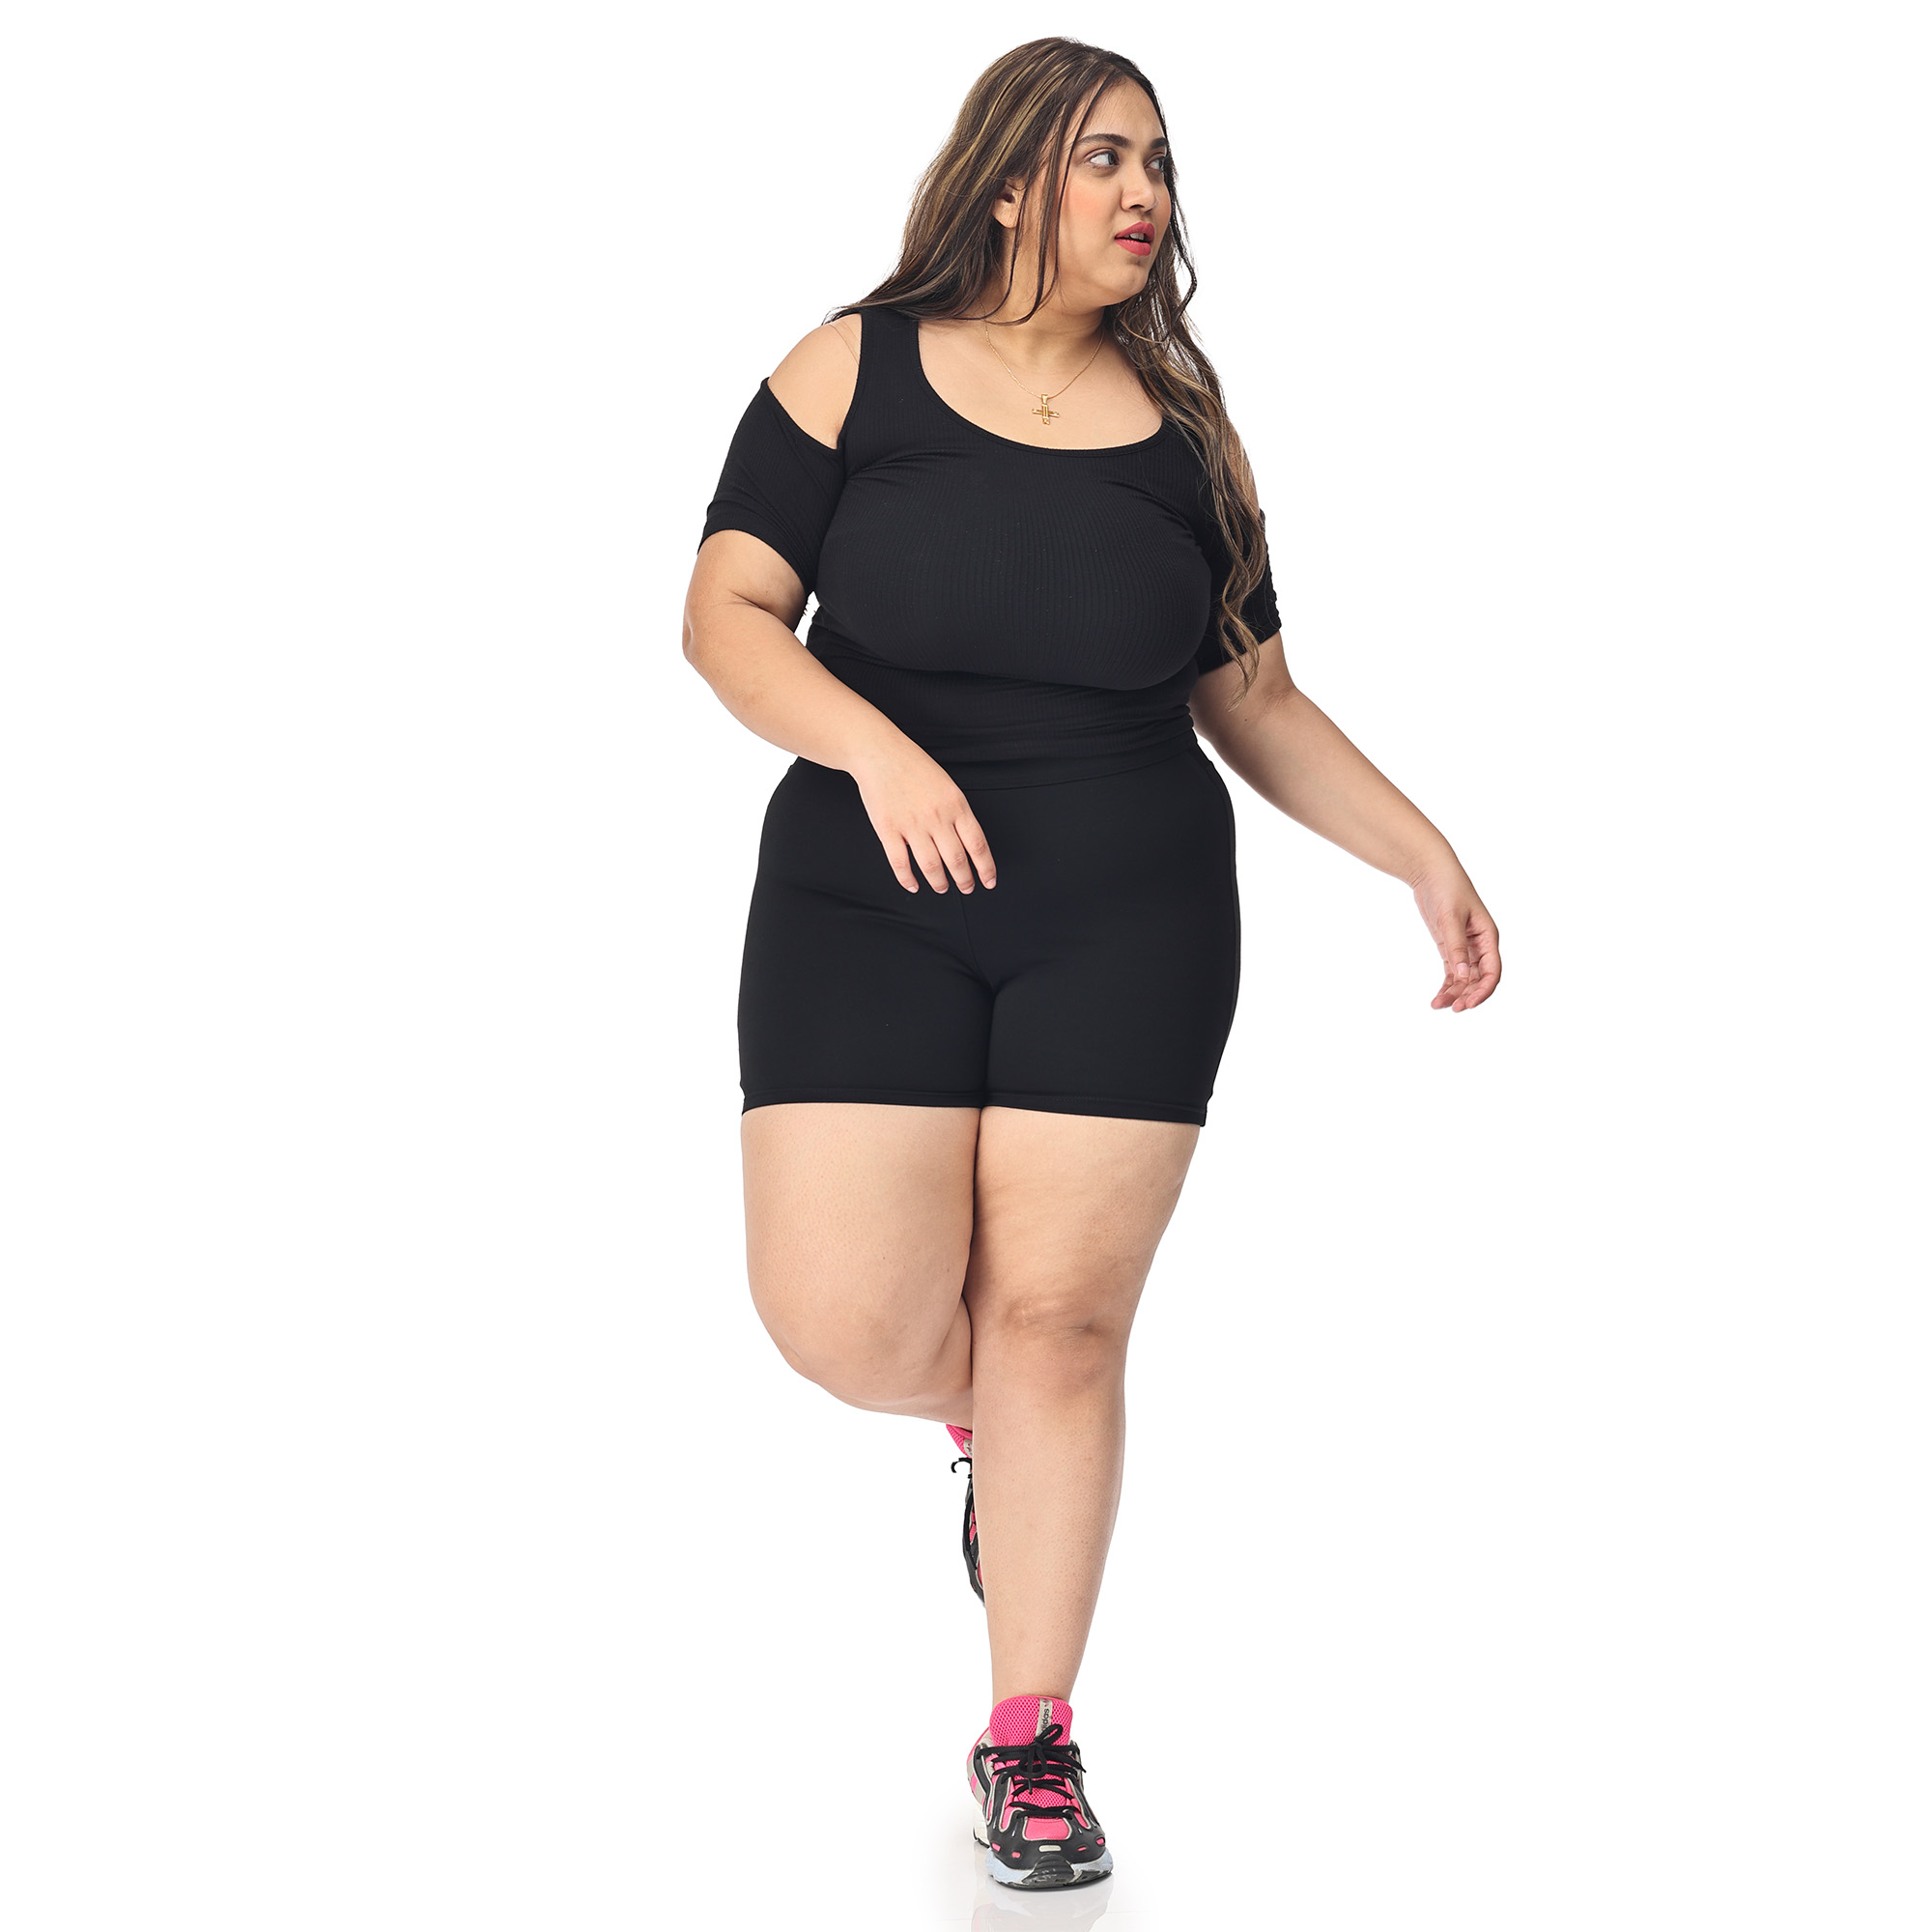 Black shorts women – Plus size active shape wear - 2 back pockets - Belore  Slims